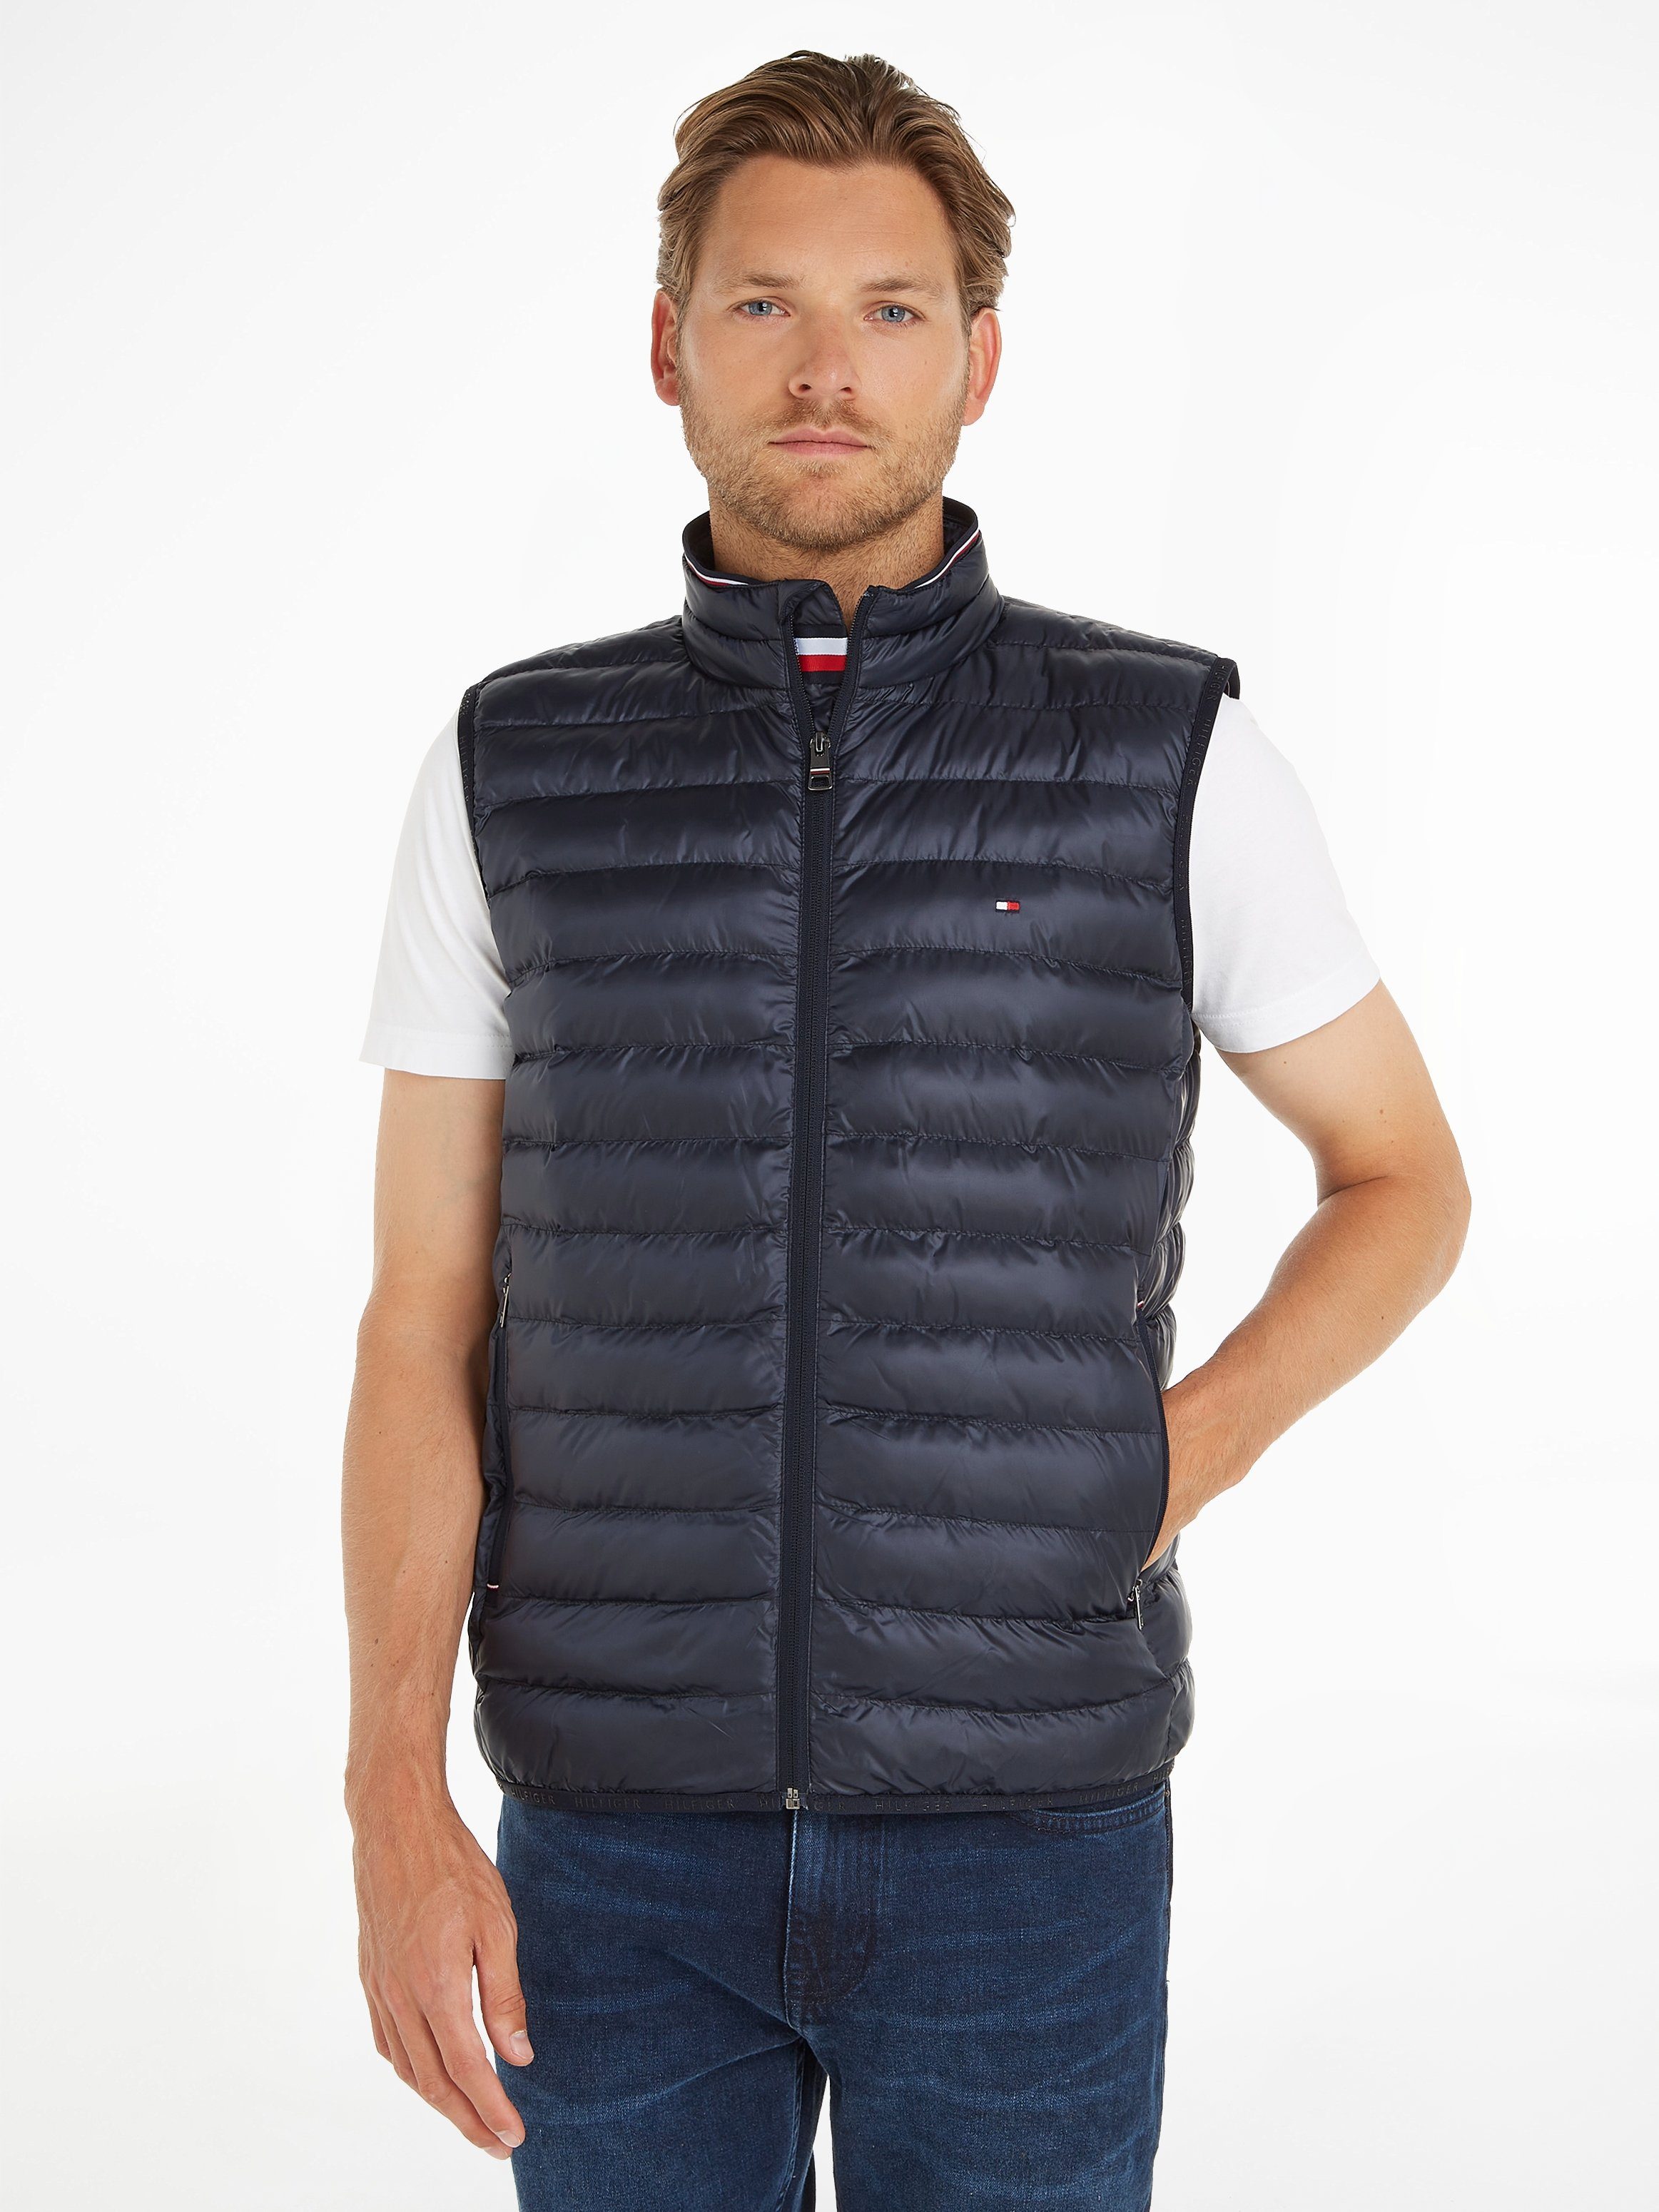 [Sonderverkaufsartikel] Tommy Hilfiger Packable Vest Down Core Steppweste